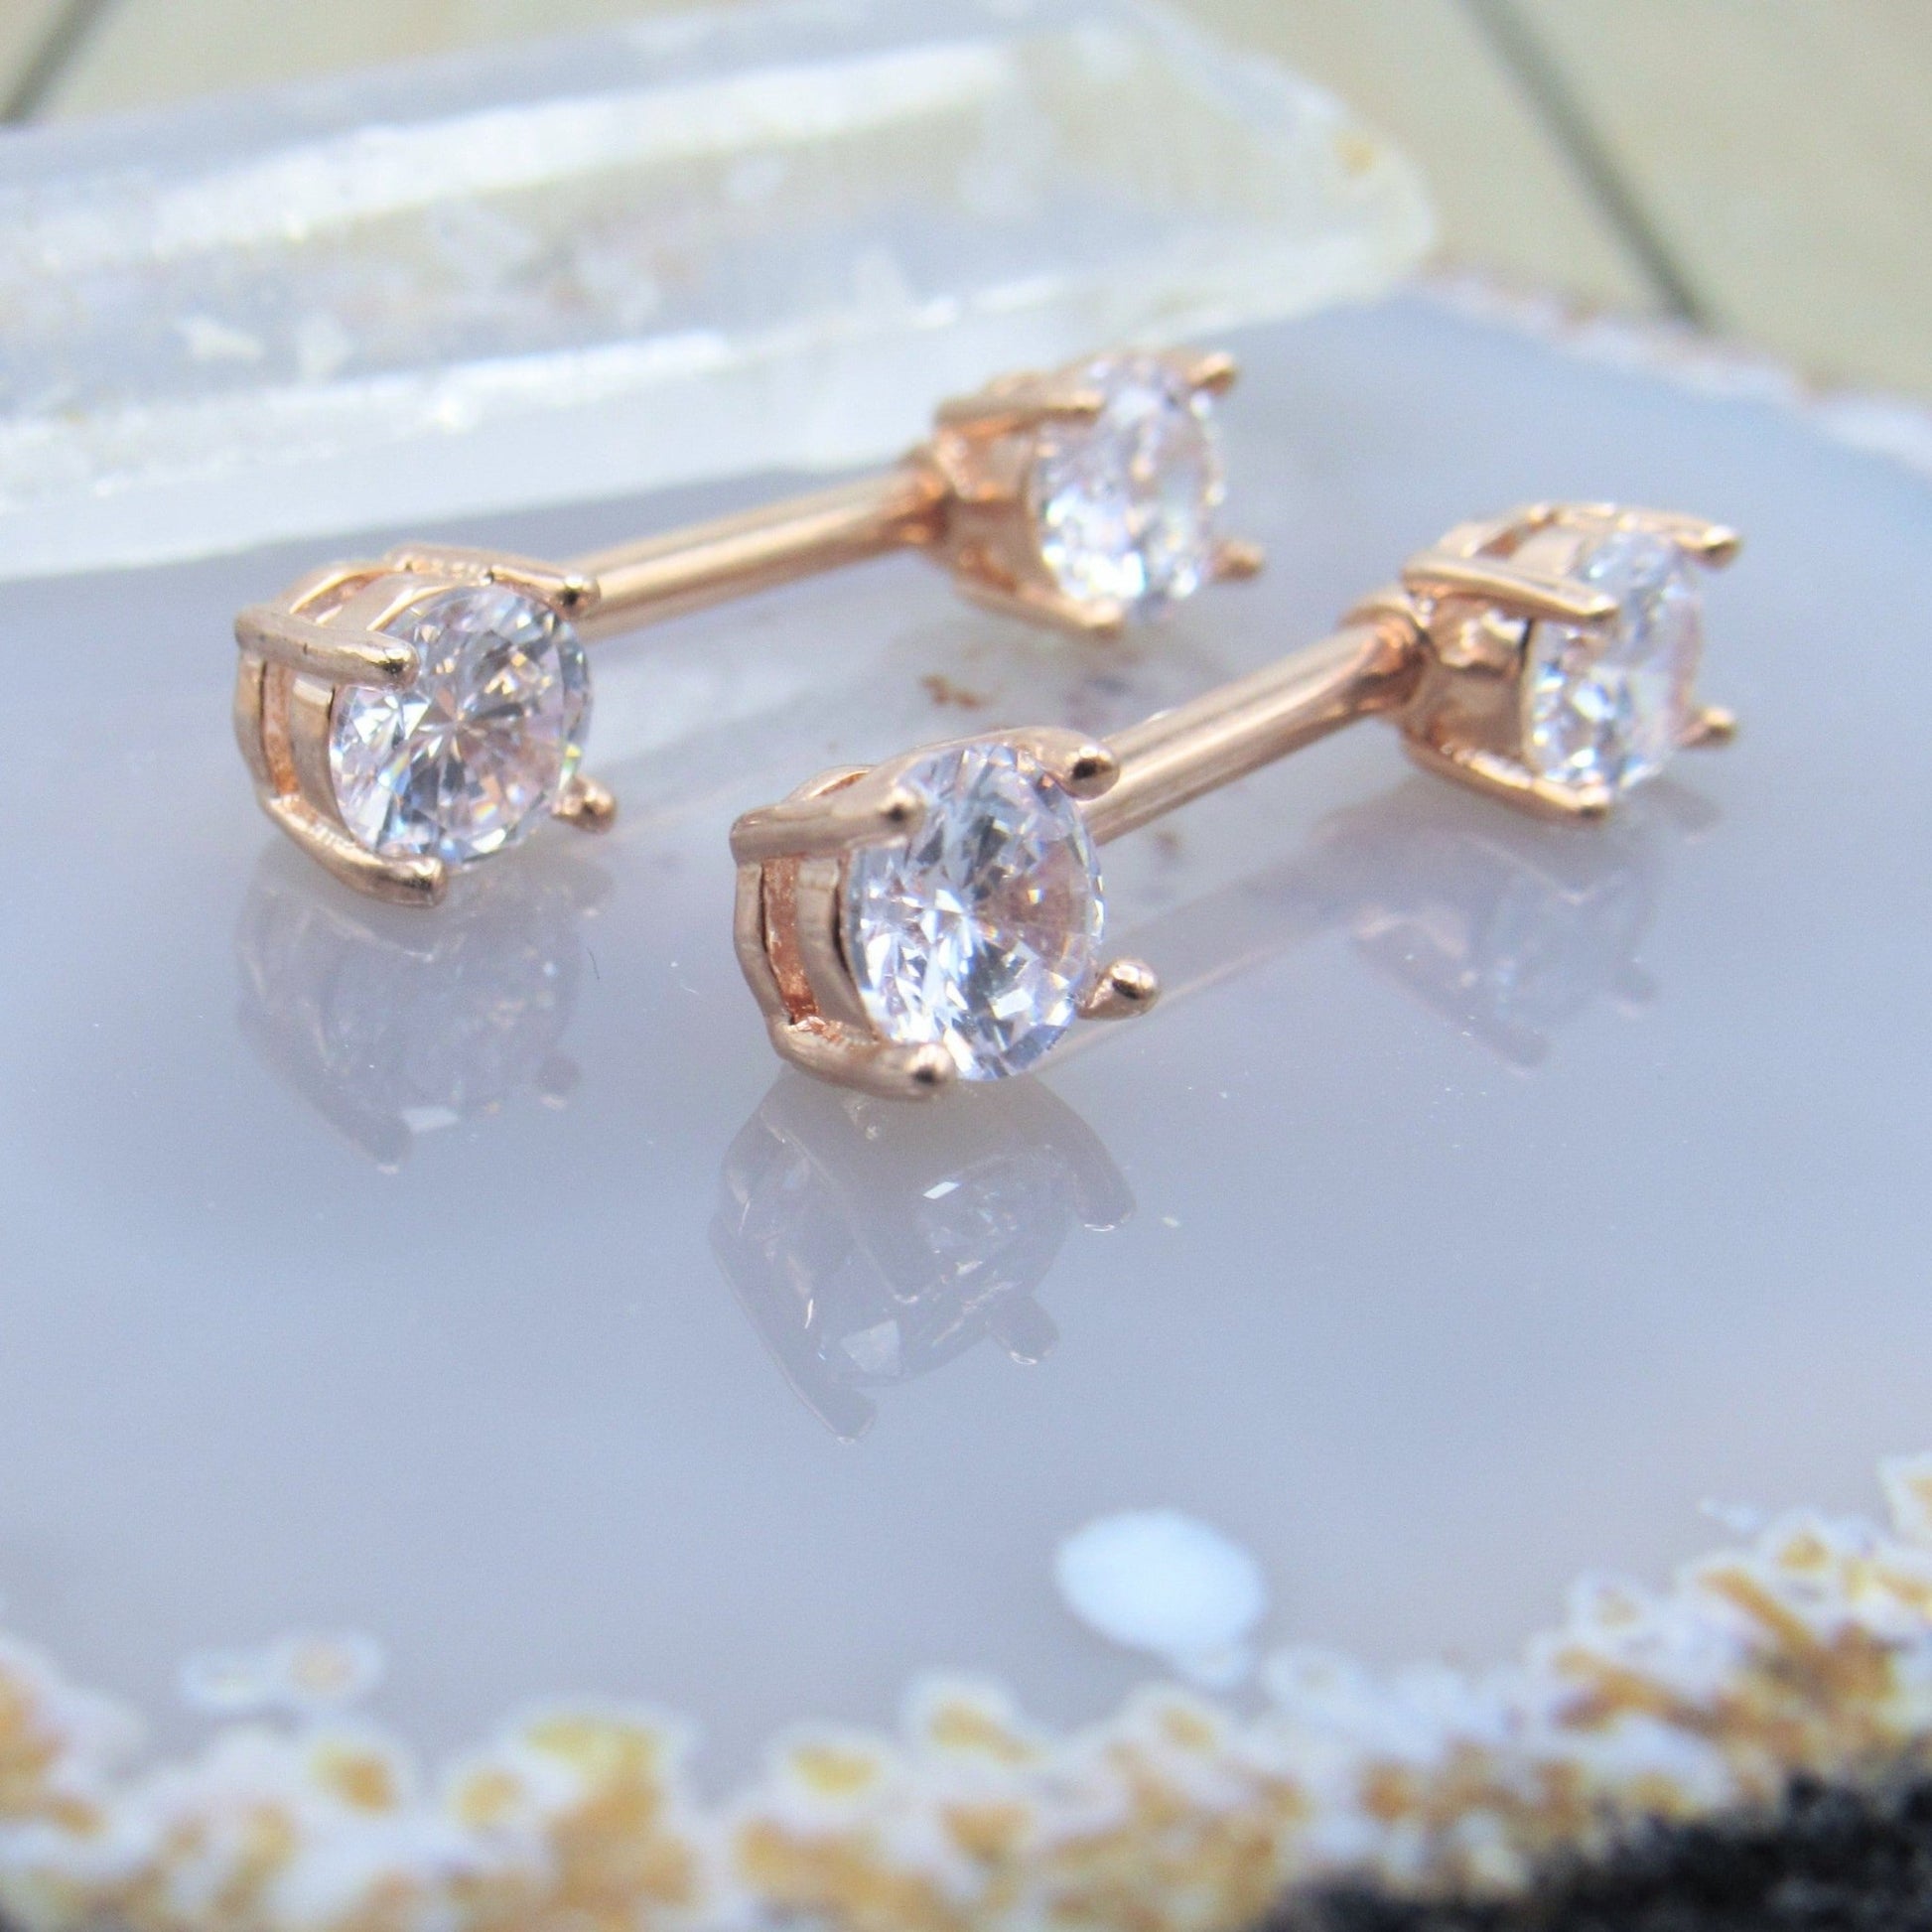 Rose gold nipple piercing barbell set 14g 1/2" crystal clear forward facing prong set gemstones - Siren Body Jewelry